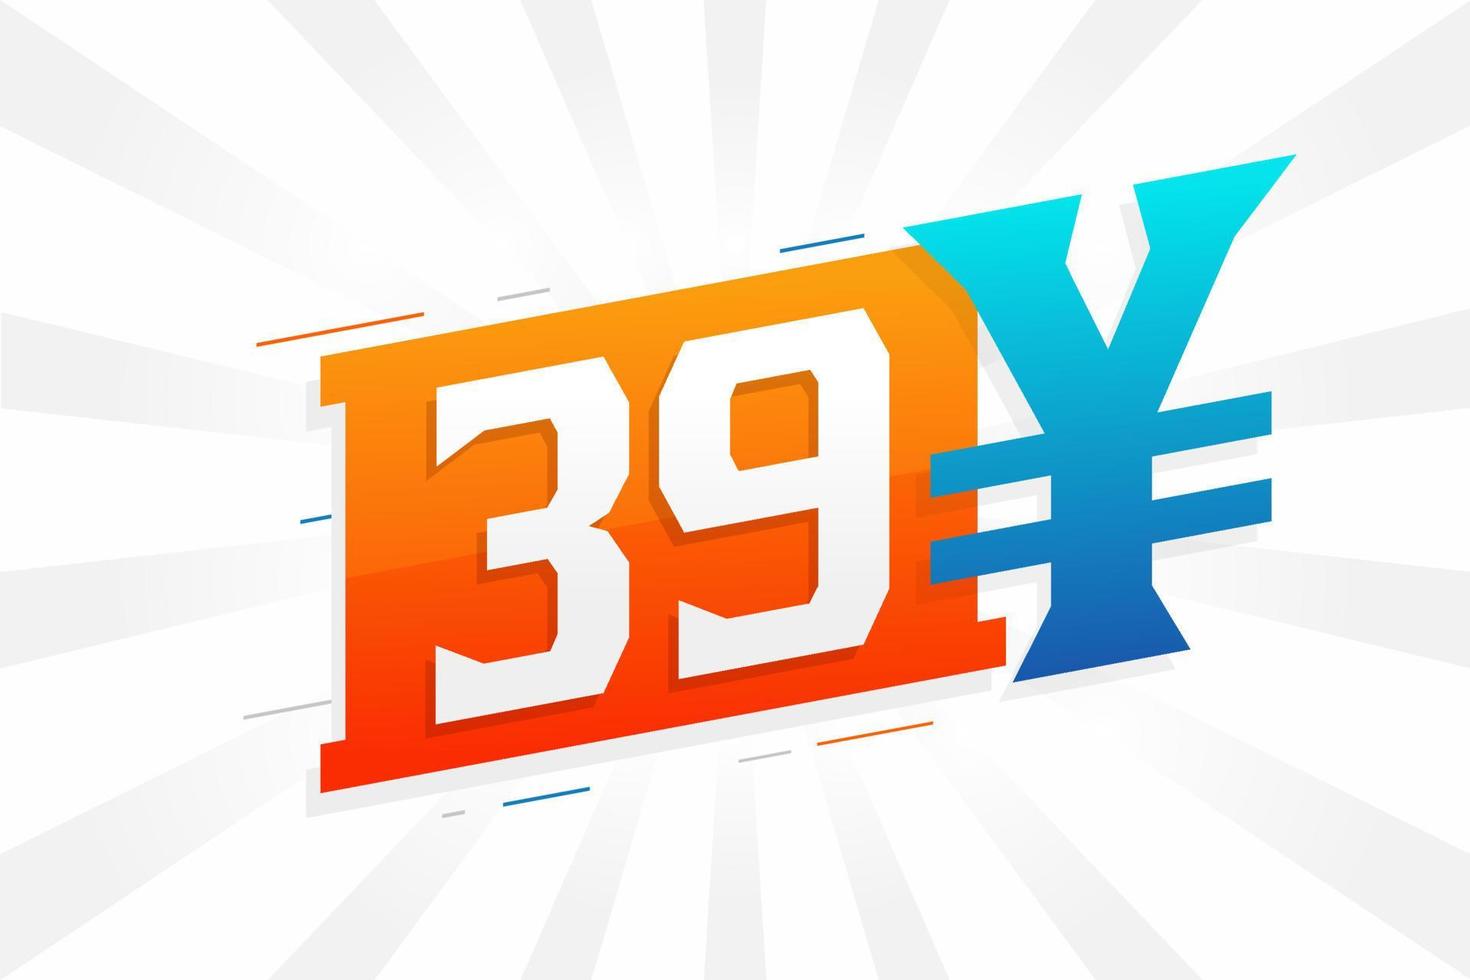 39 yuan Cinese moneta vettore testo simbolo. 39 yen giapponese moneta i soldi azione vettore